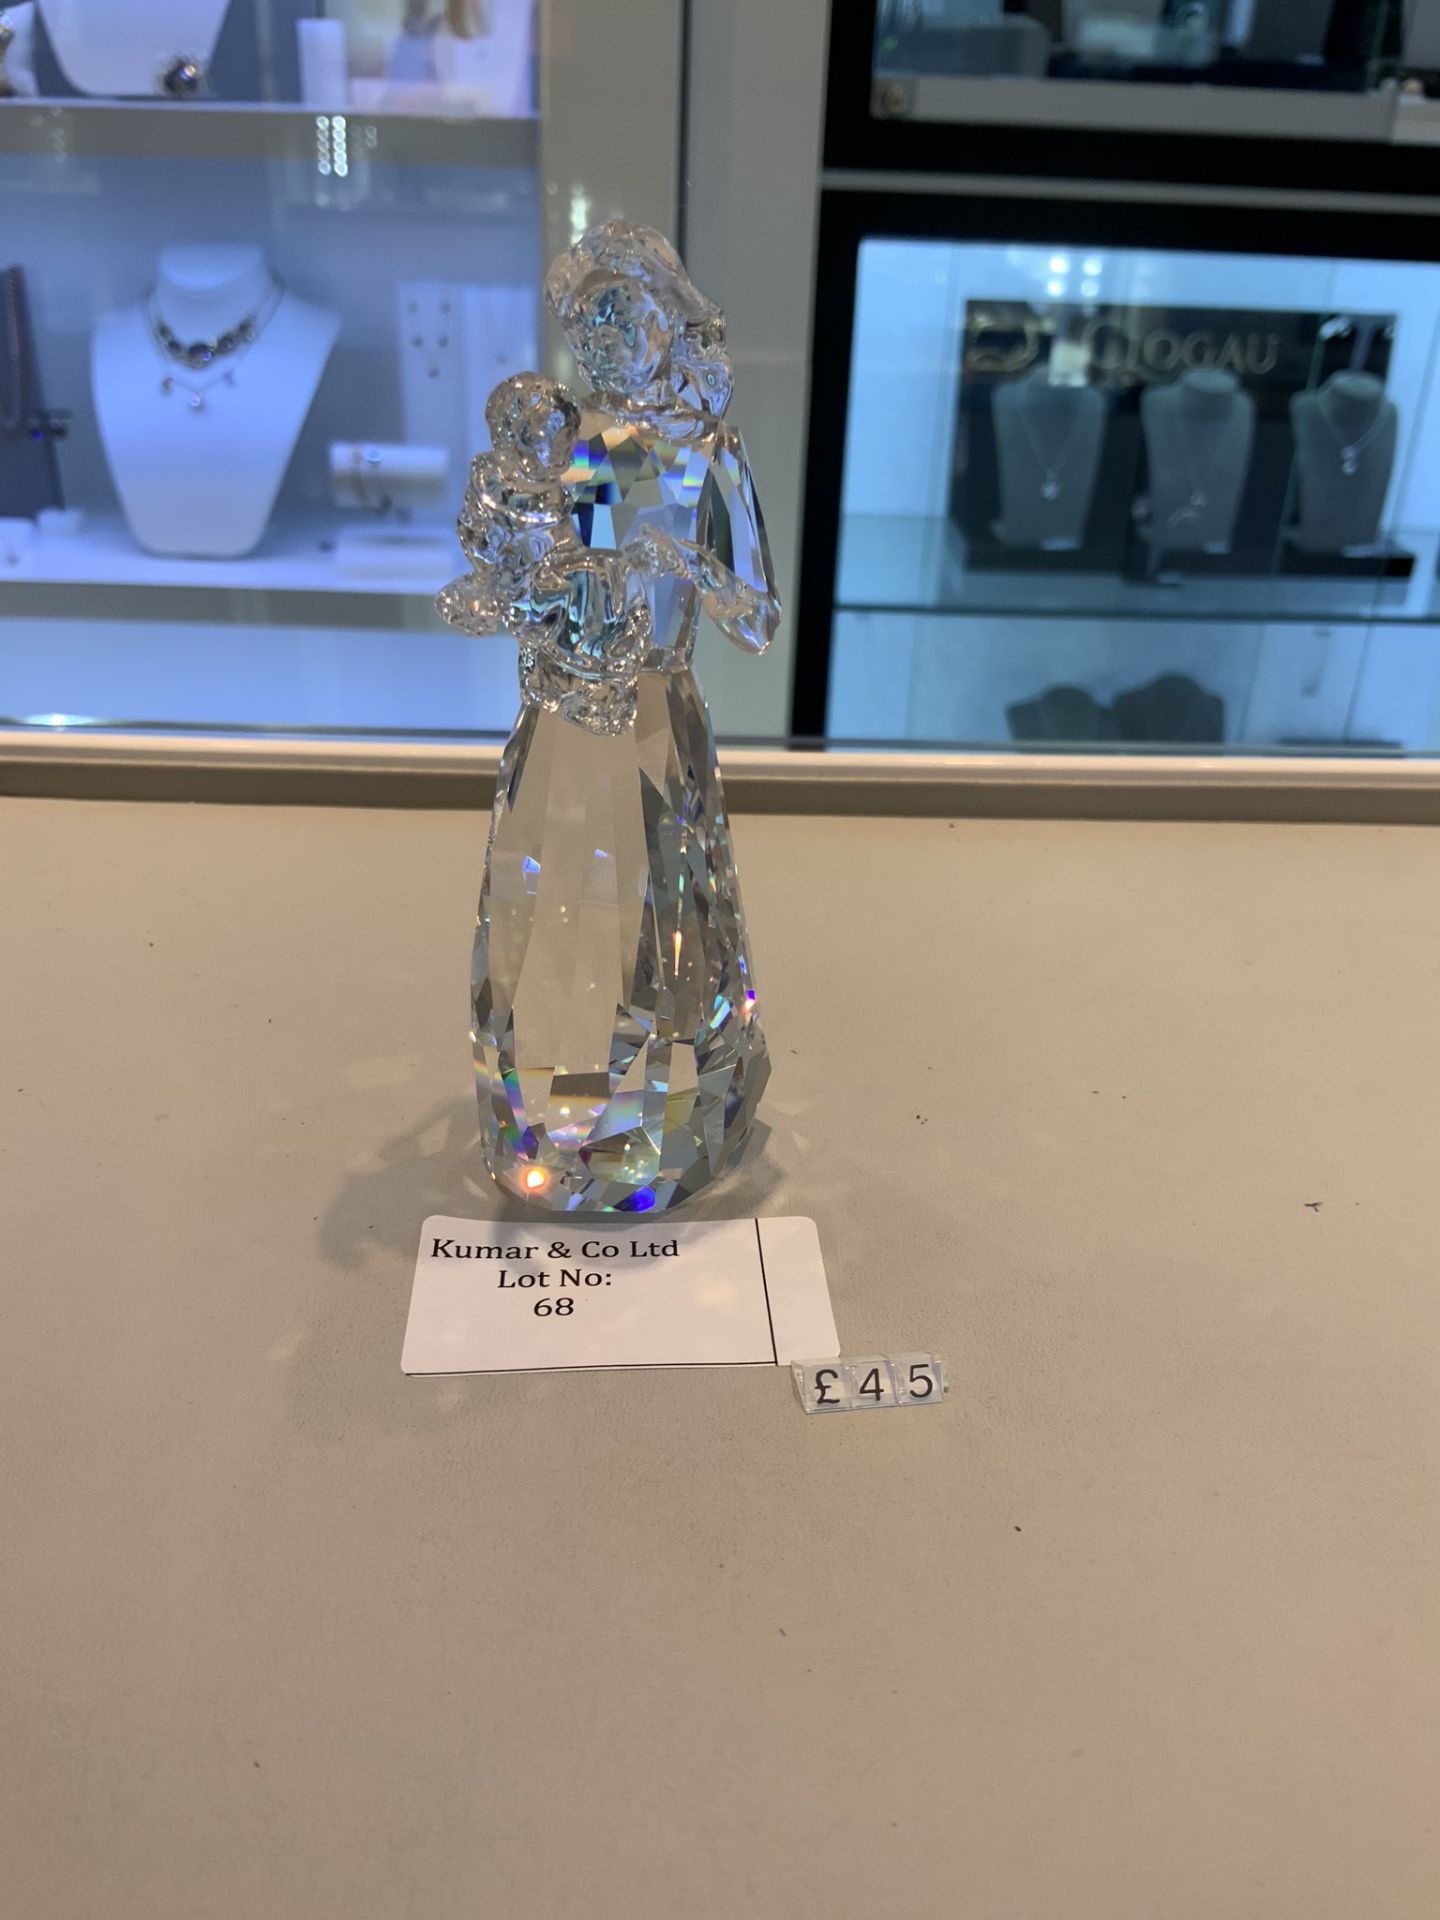 Swarovski Crystal Mother and Child 'A Loving Bond' Figurine RRP £45 - Image 2 of 3